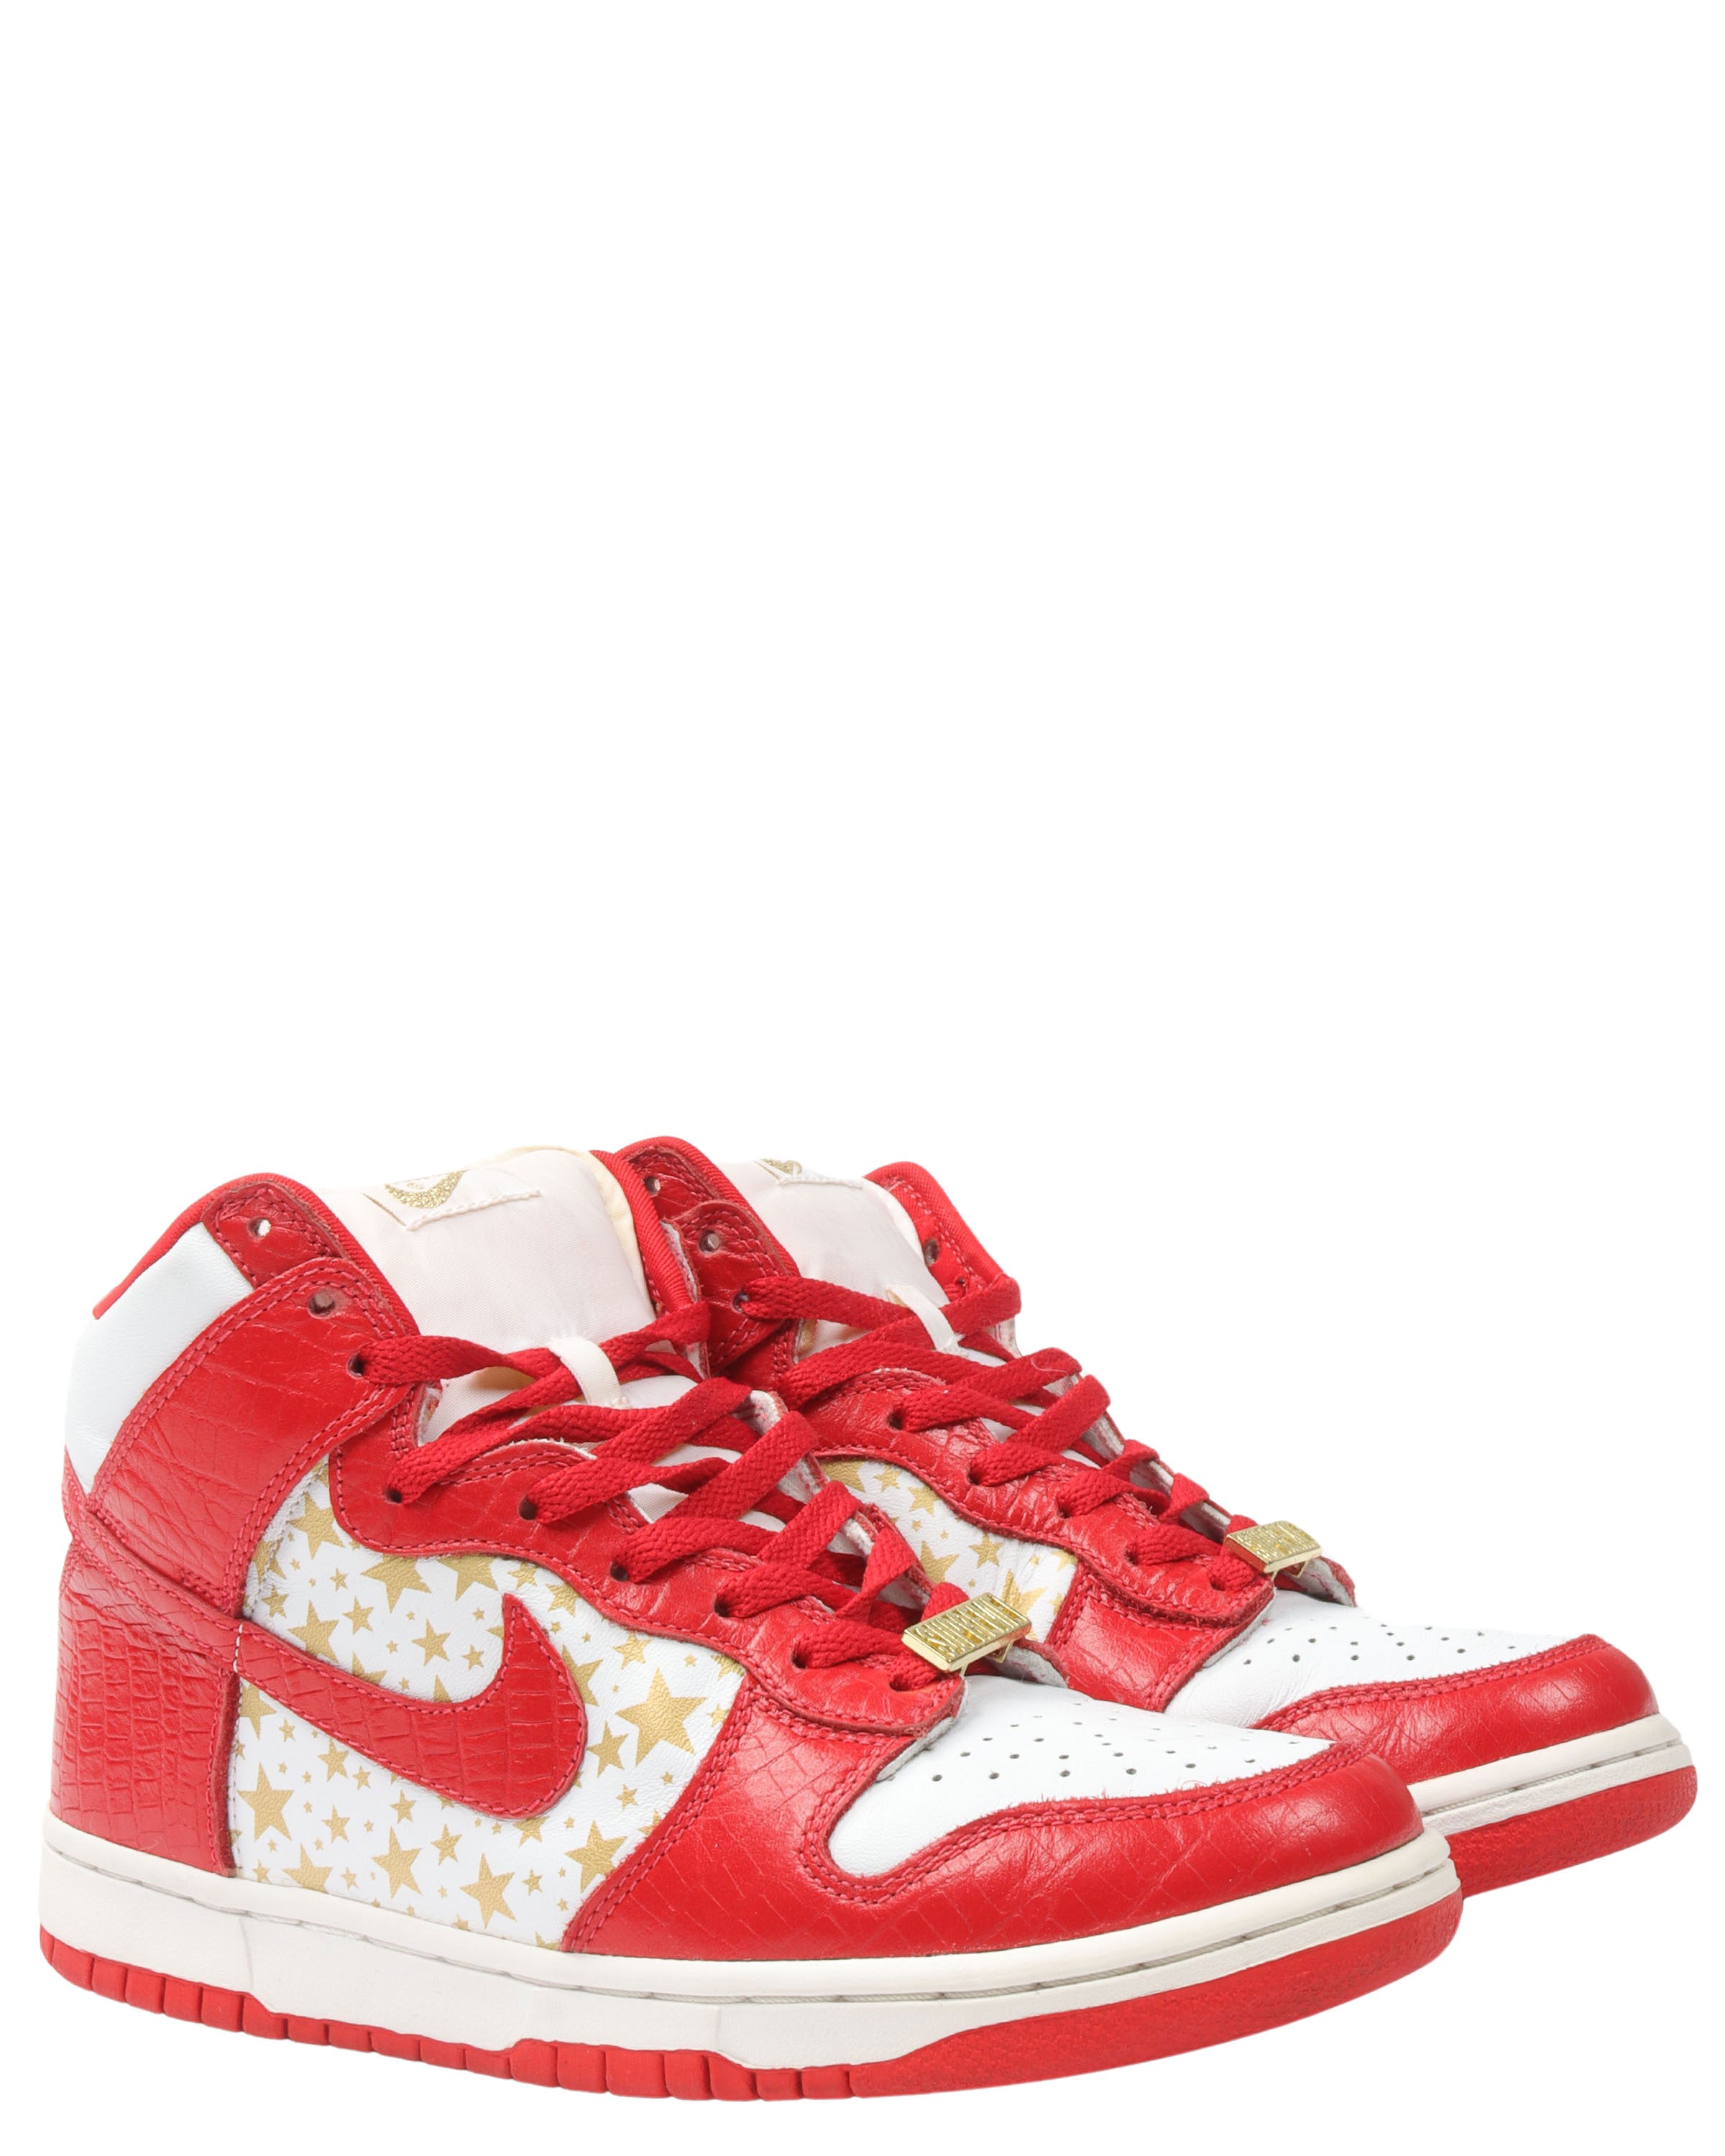 Supreme X Dunk High Pro SB 'Red' - Nike - 307385 161 - white